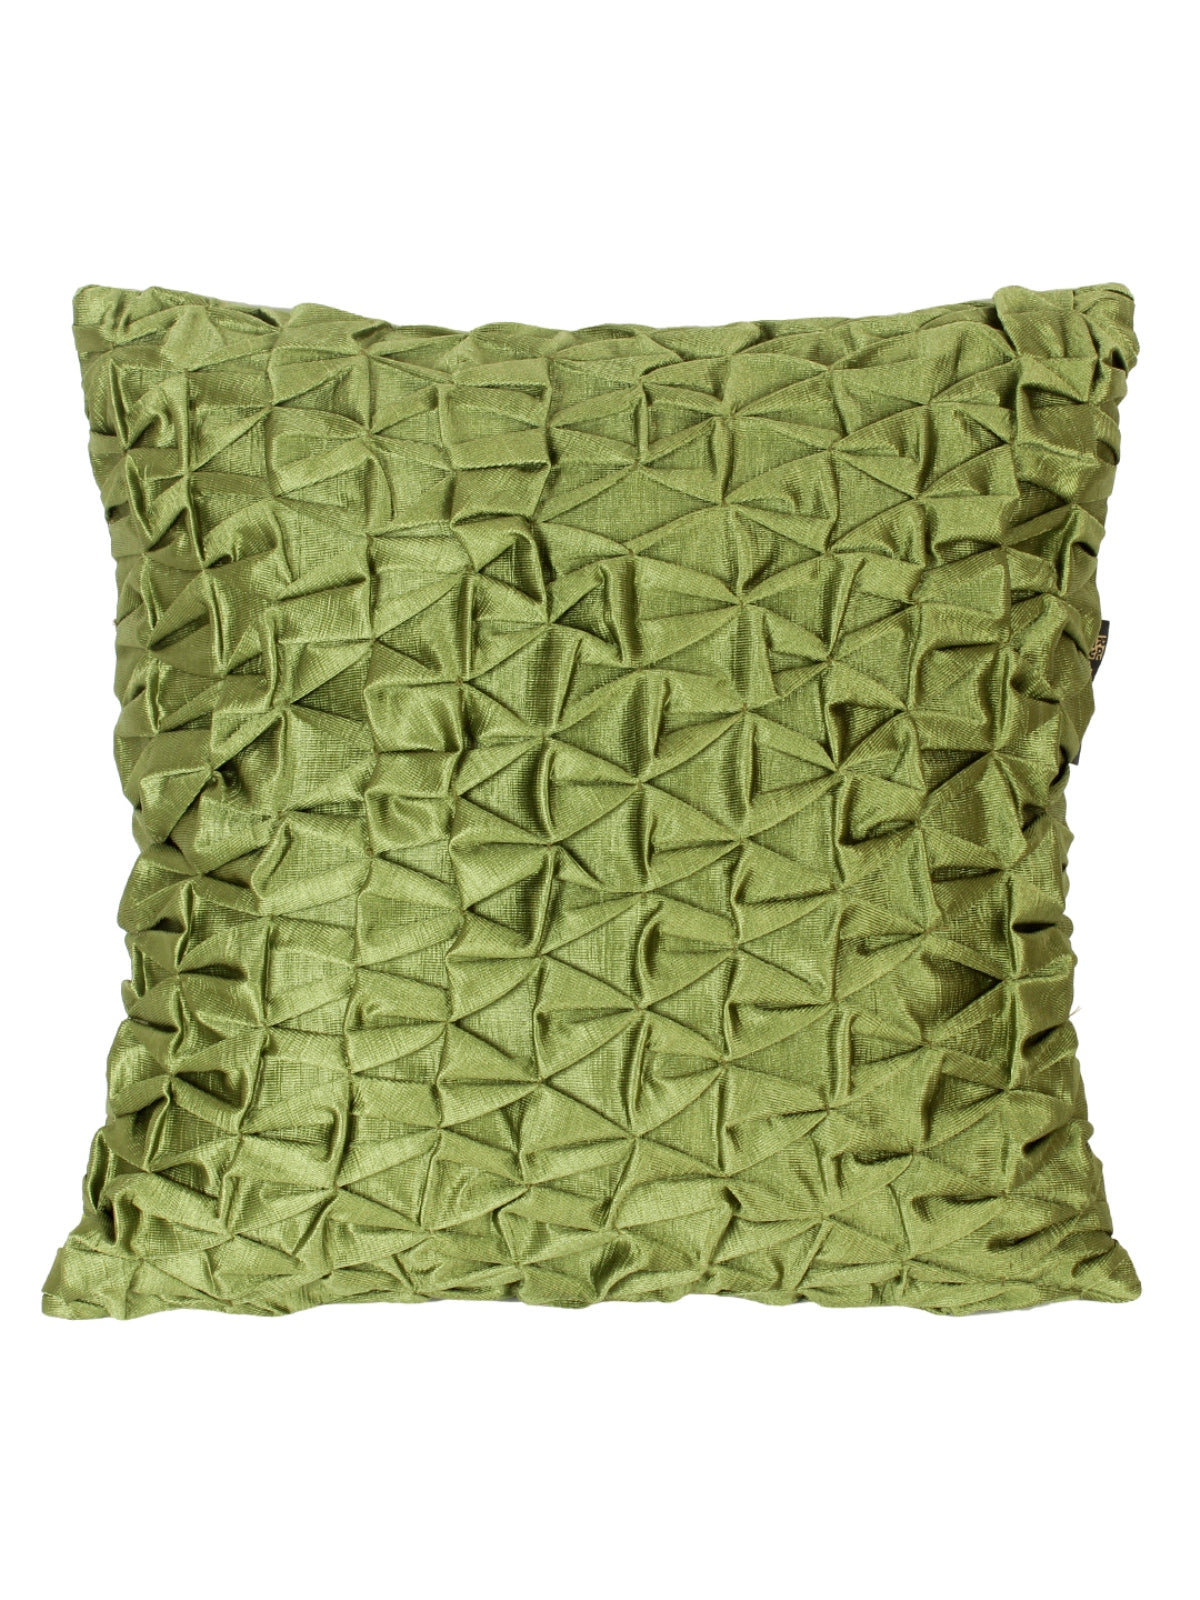 ROMEE Green Geometric Printed Cushion Covers Set of 3